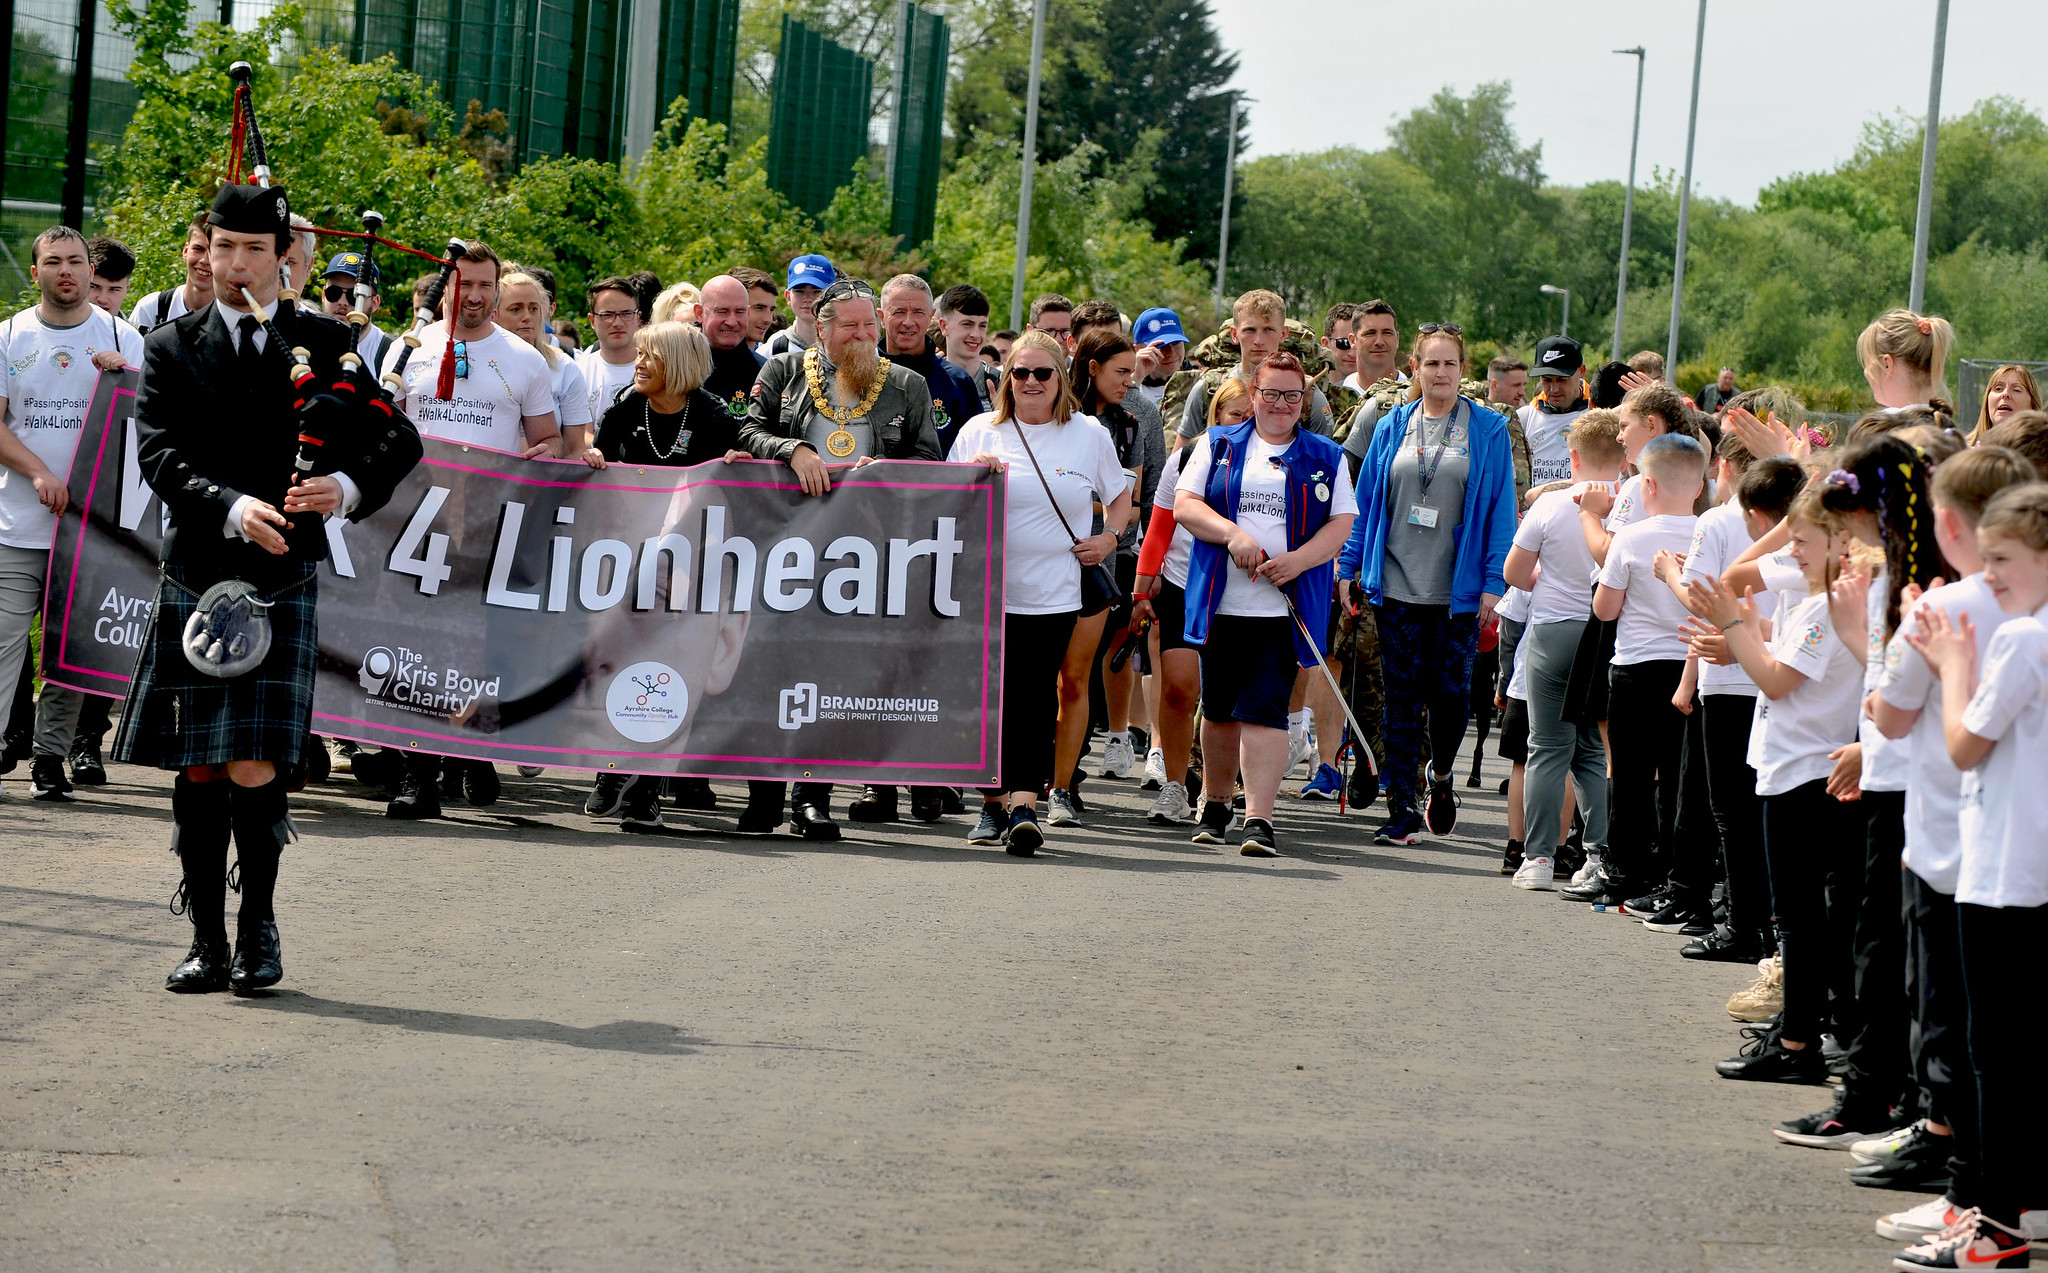 Kilwinning to Kilmarnock charity #Walk4Lionheart a major success